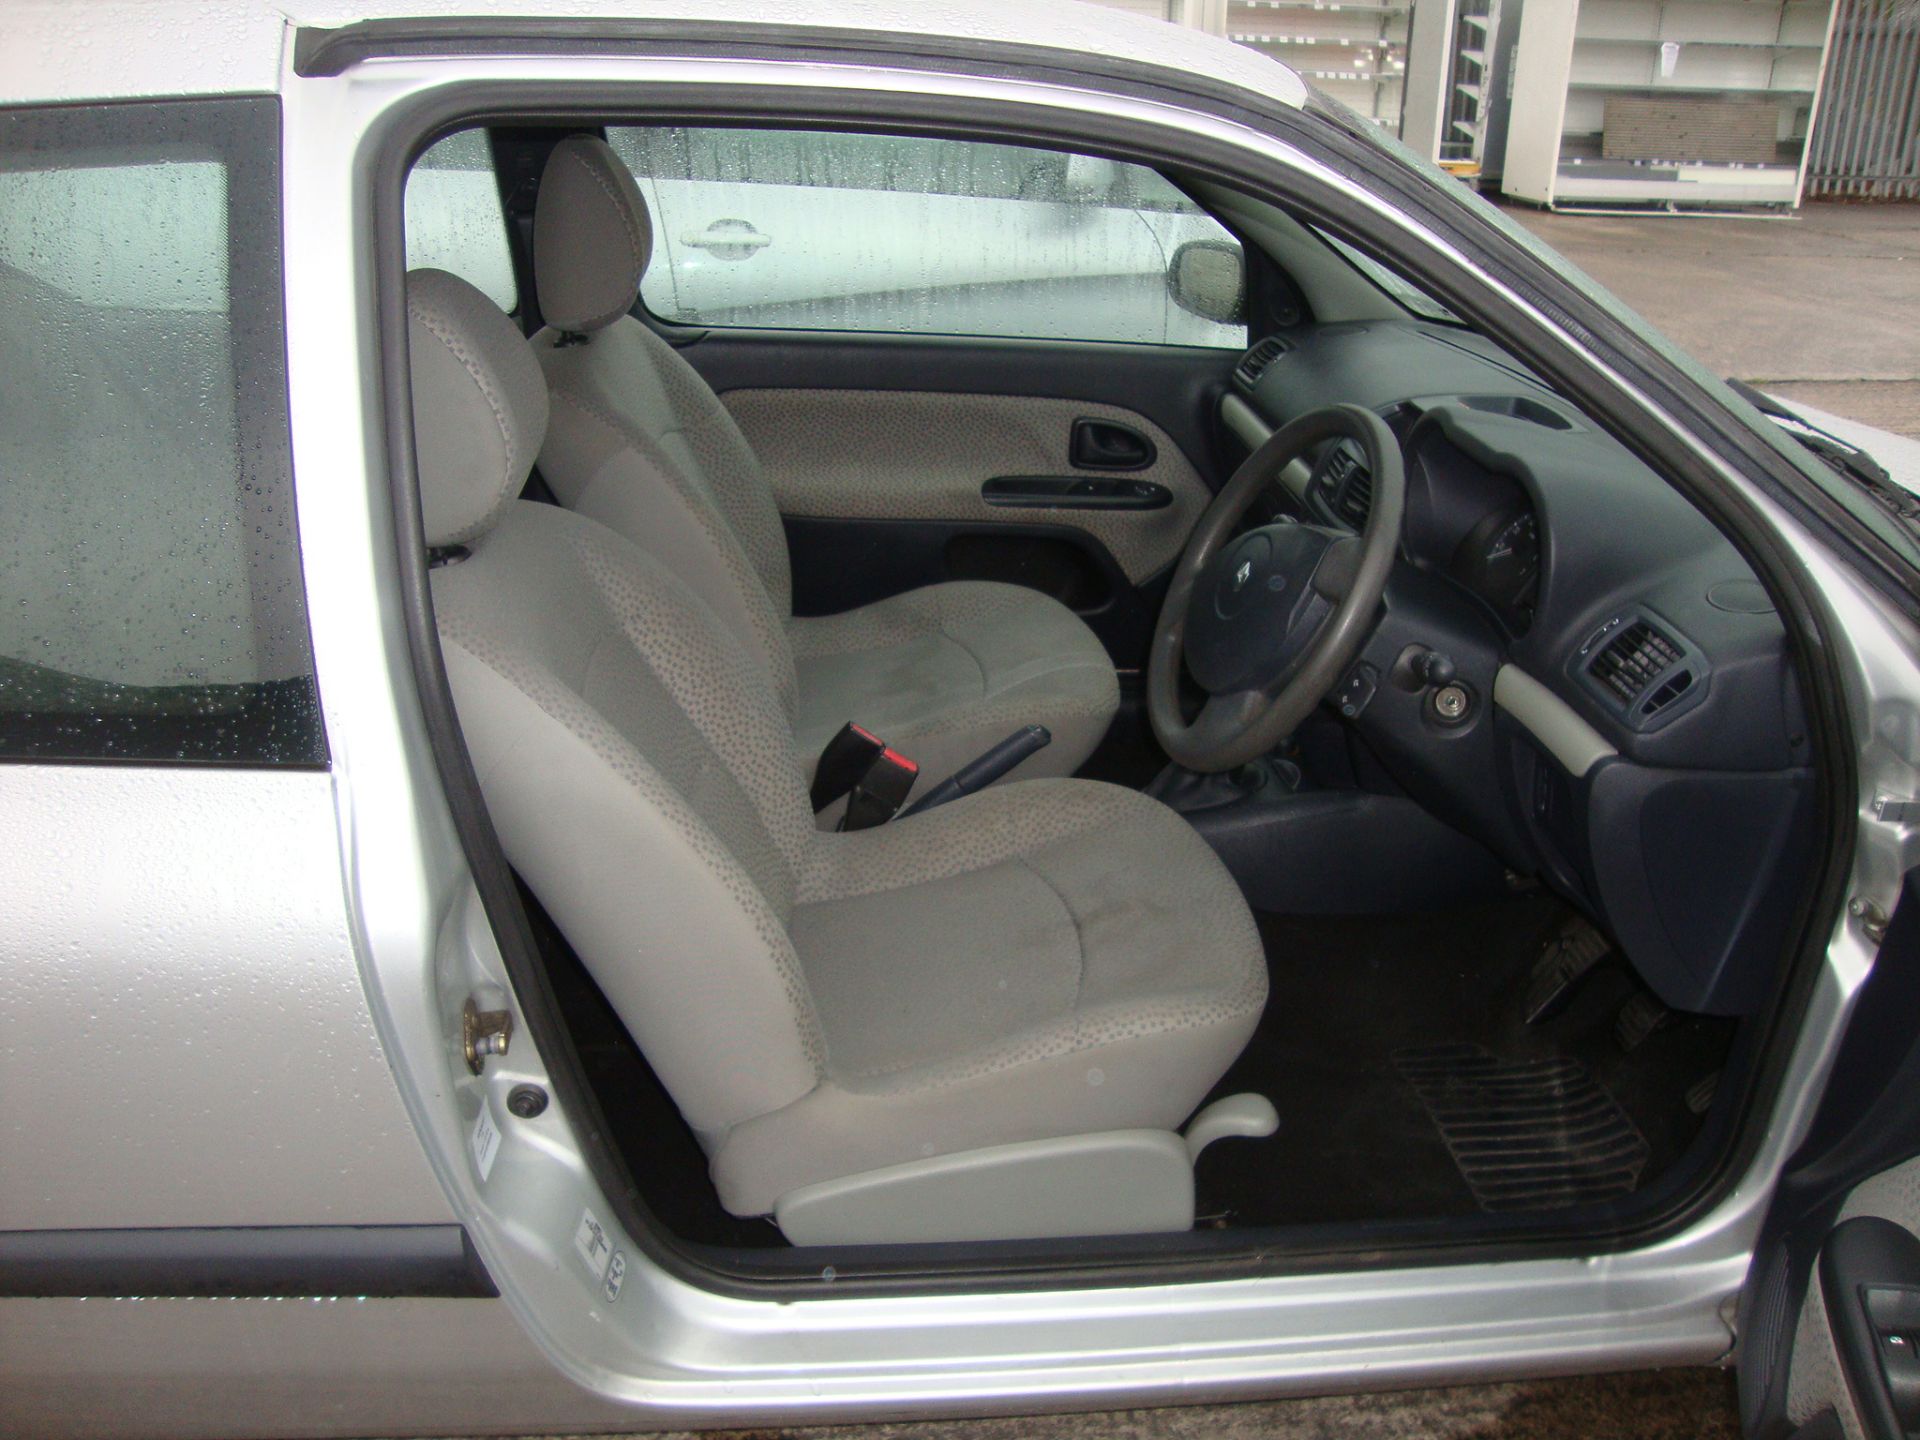 DG06 VYR Renault Clio Campus 3-door hatchback - Image 10 of 11